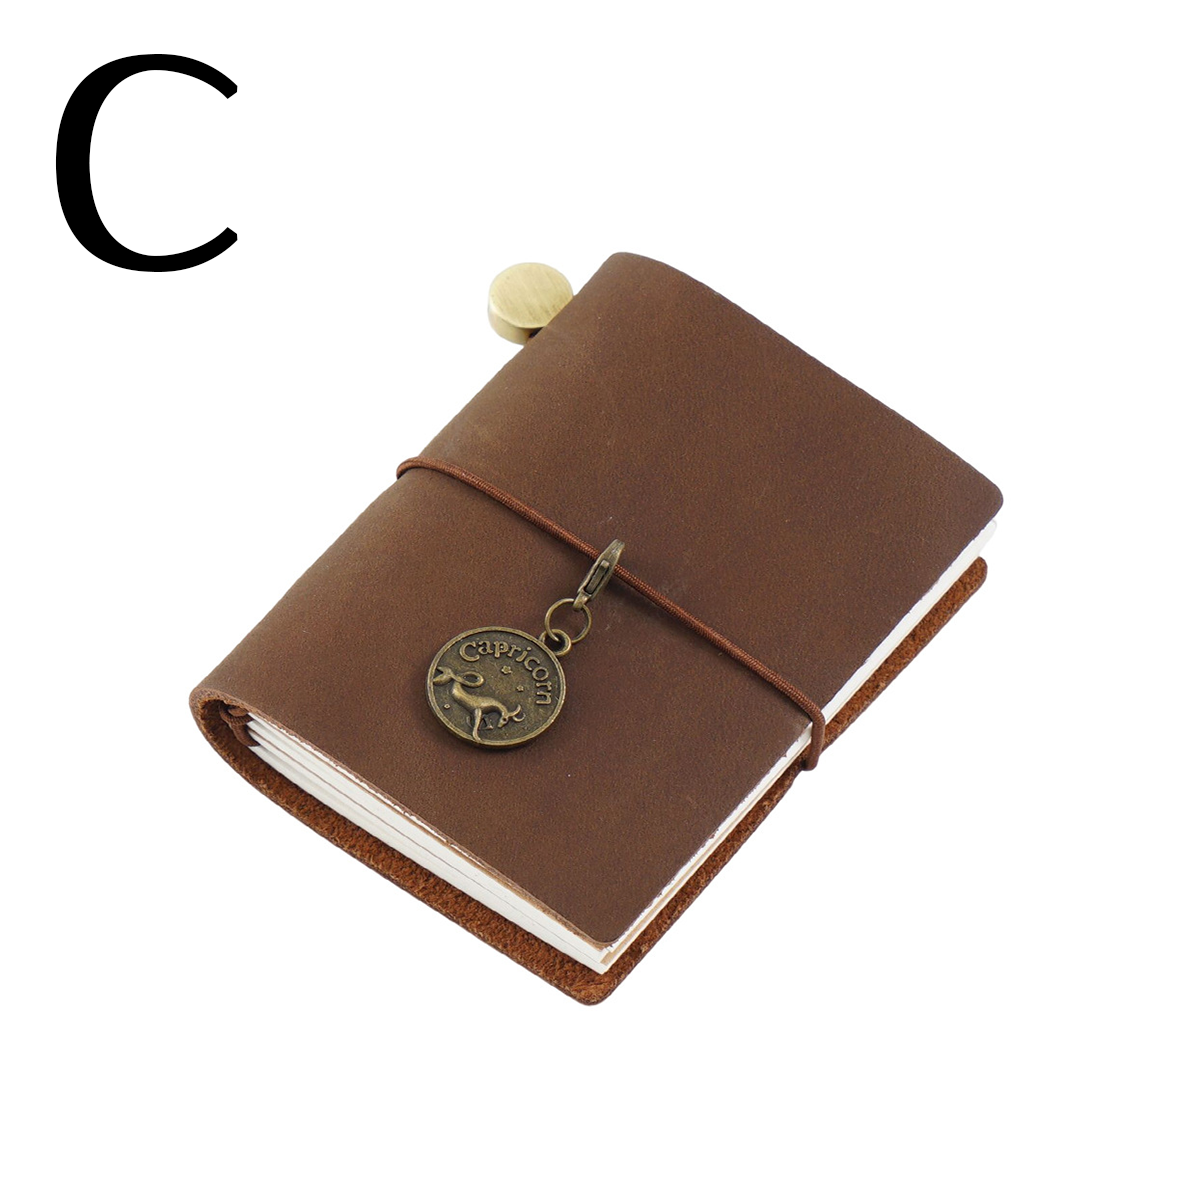 68mm*85mm Mini Leather Journal